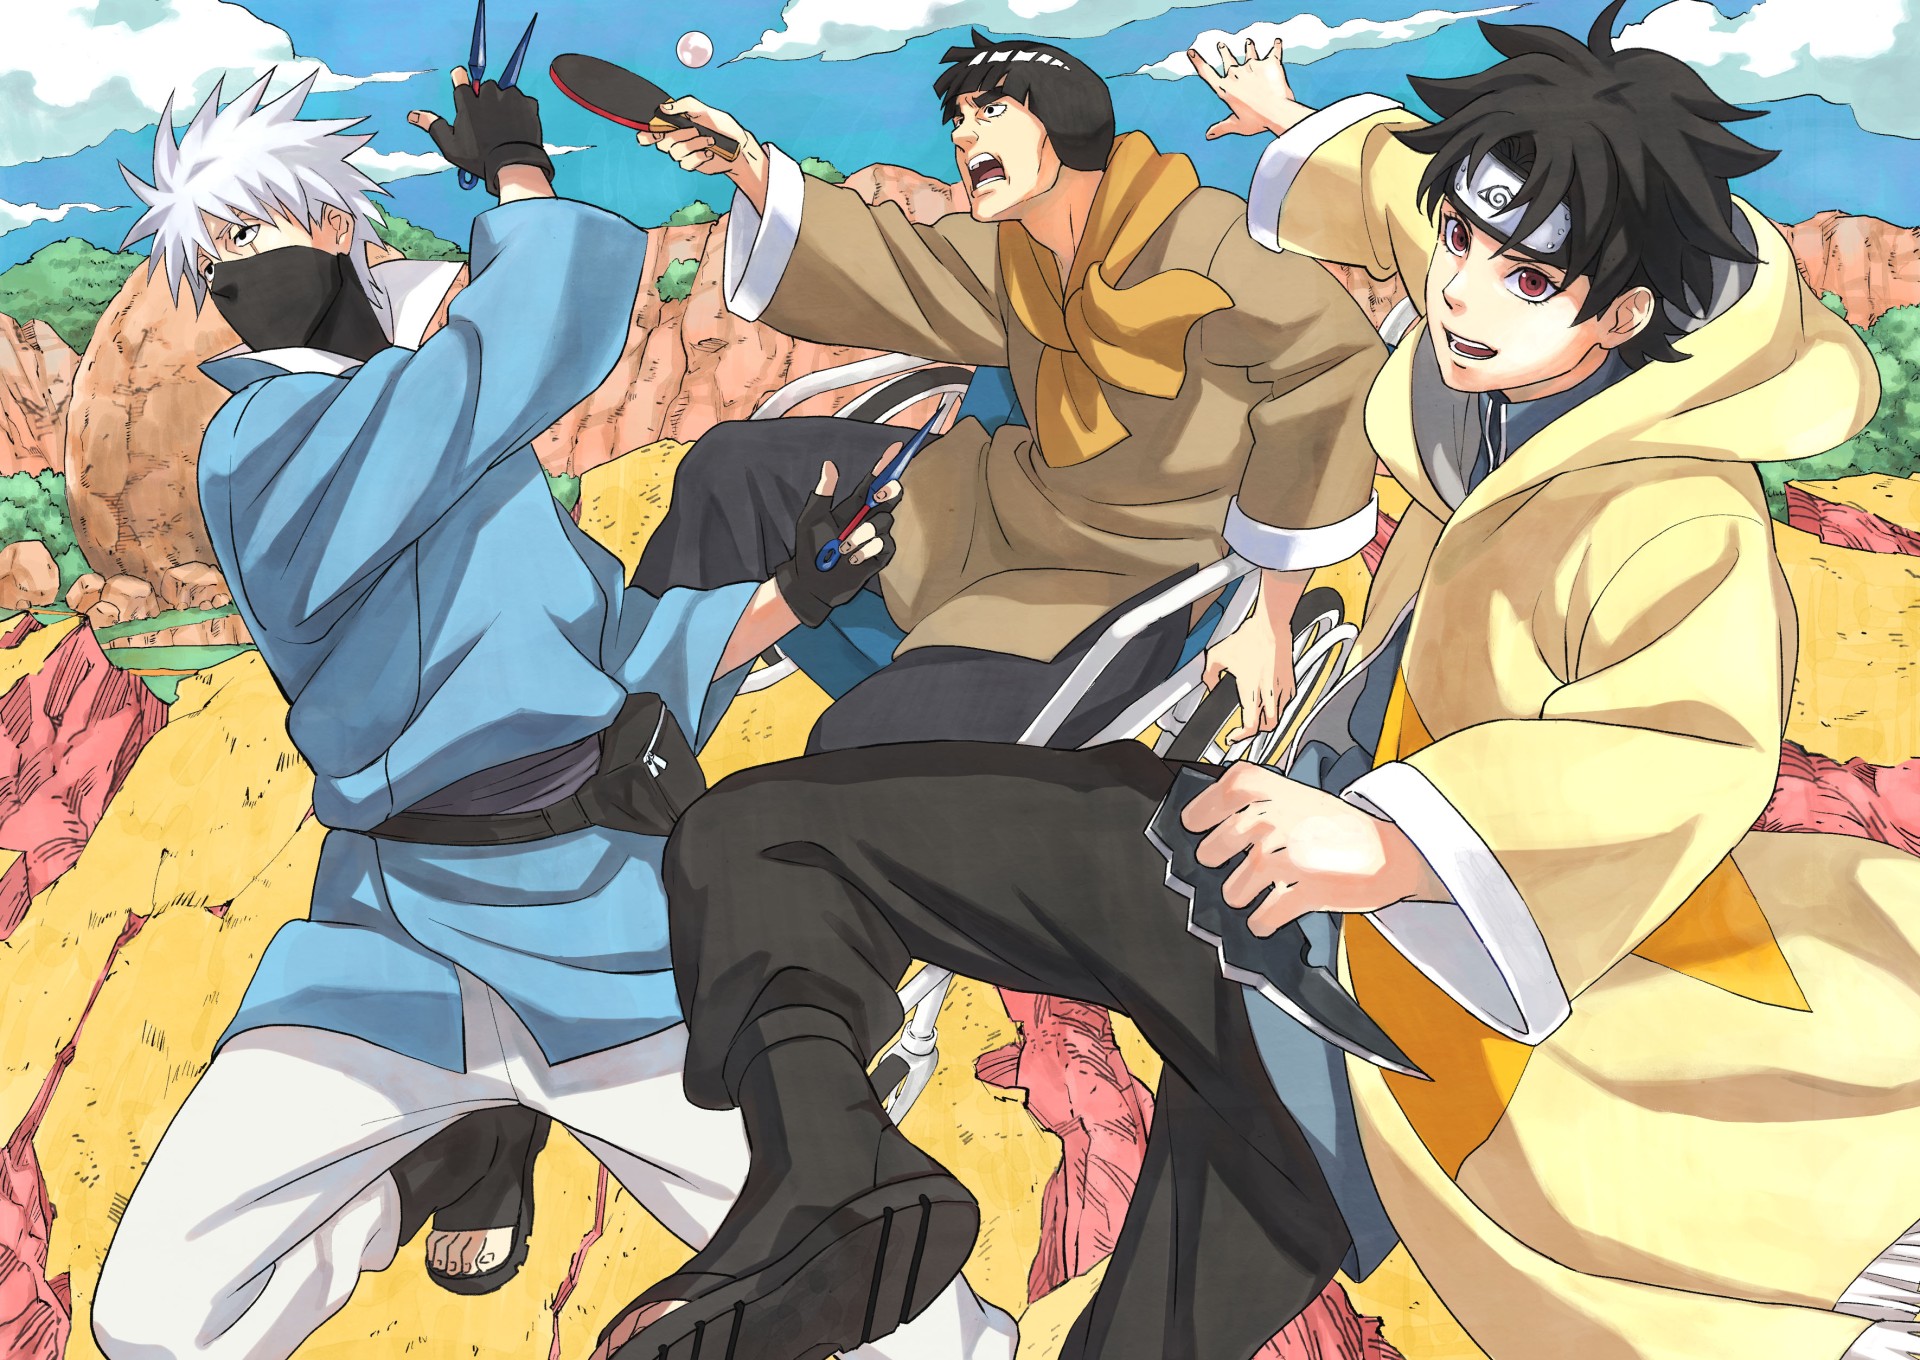 Manga Version of Naruto: Konoha's Story Novel Starts 10/29 on